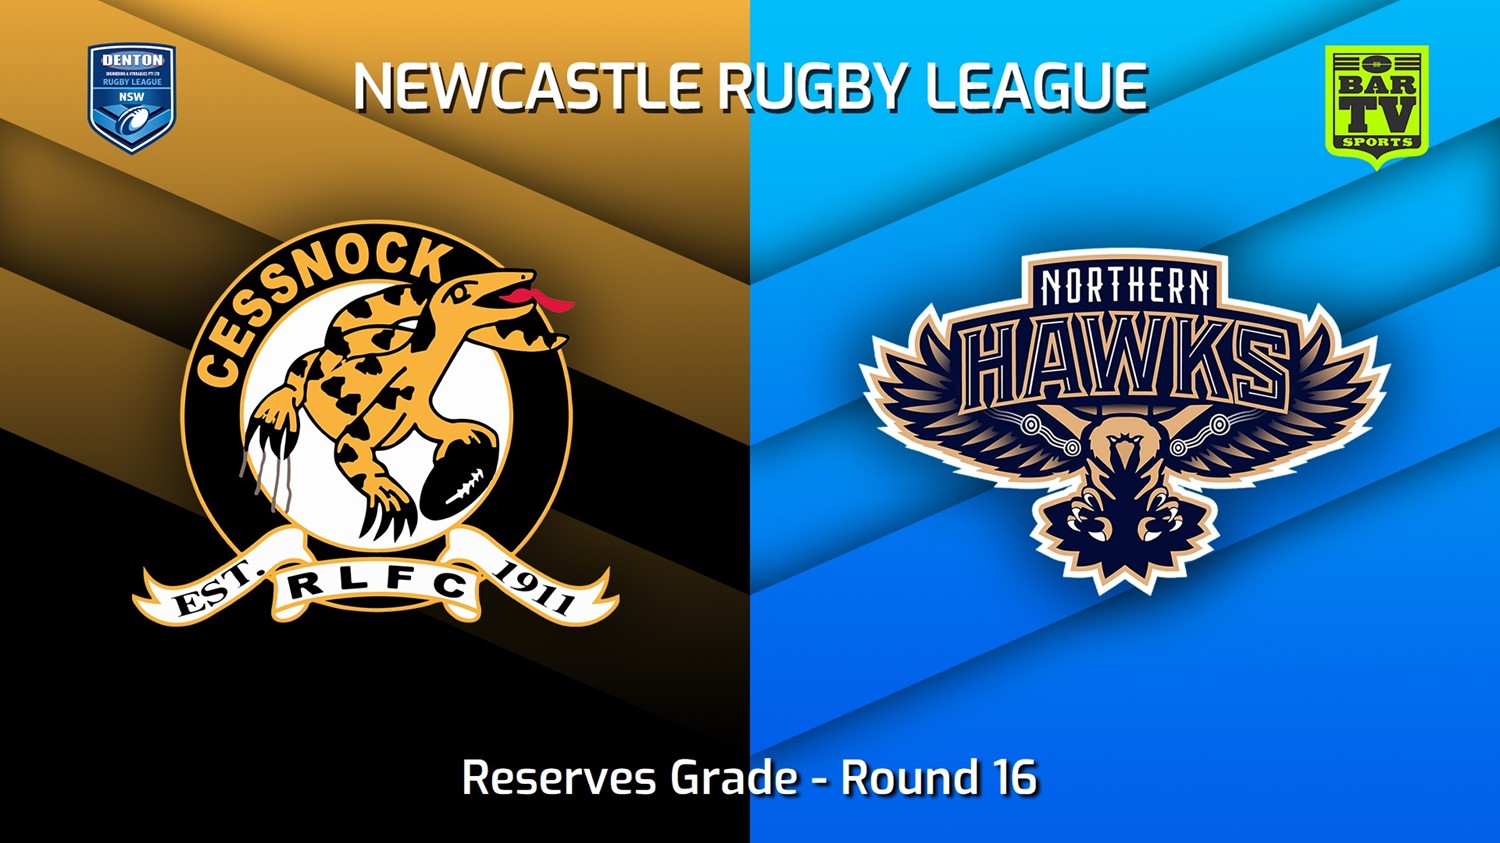 220716-Newcastle Round 16 - Reserves Grade - Cessnock Goannas v Northern Hawks Slate Image